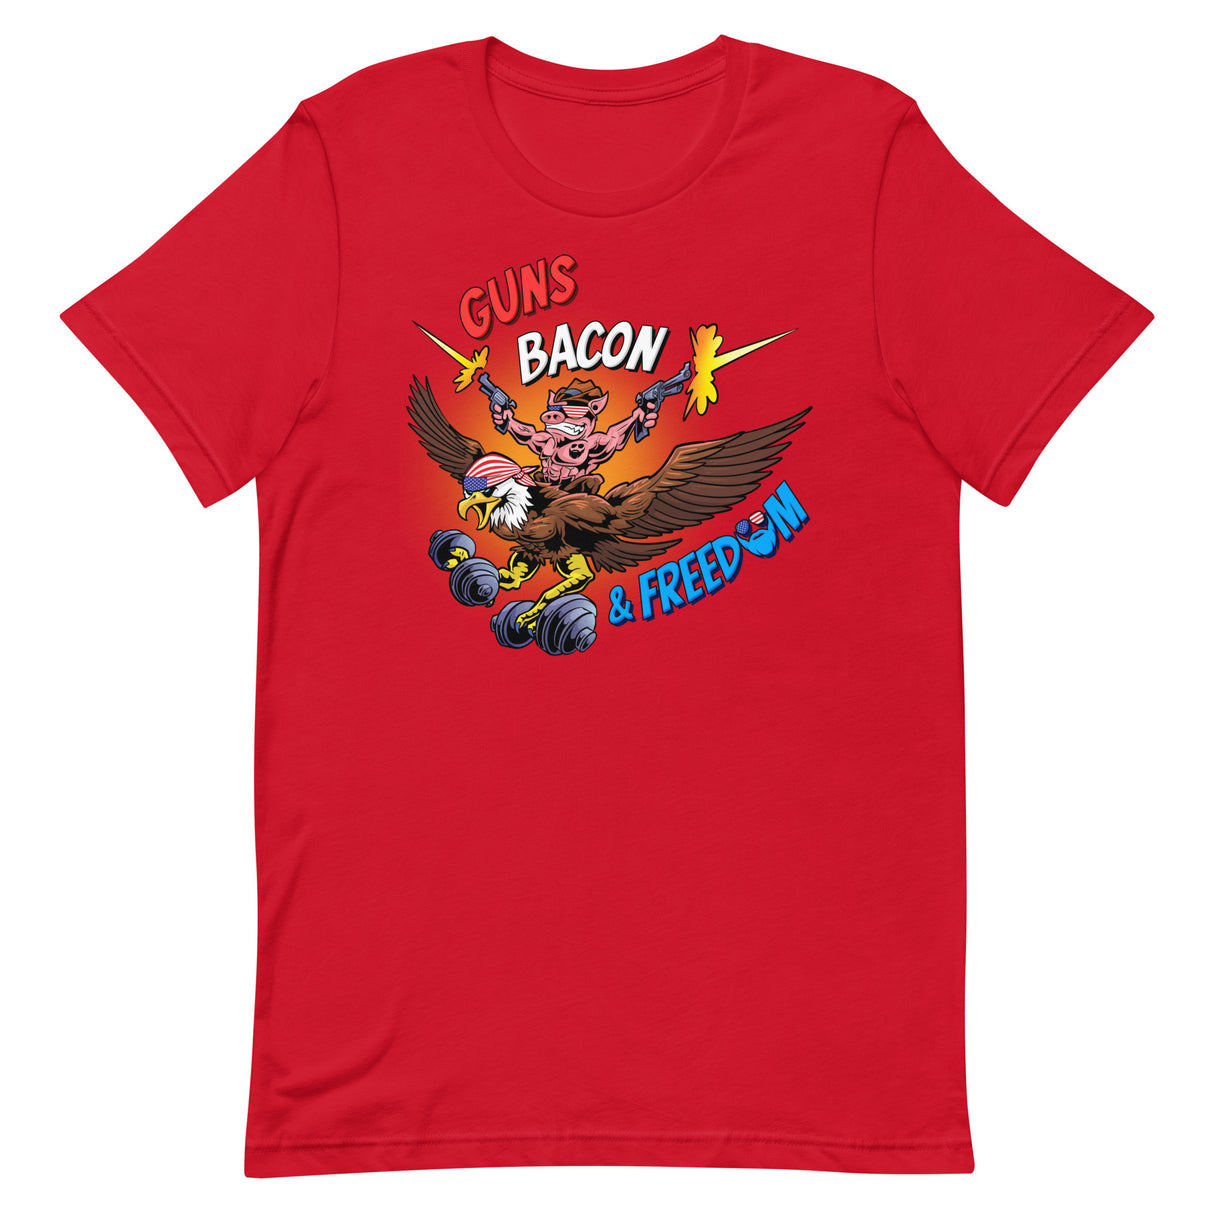 Guns, Bacon & Freedom (Image) T-Shirt